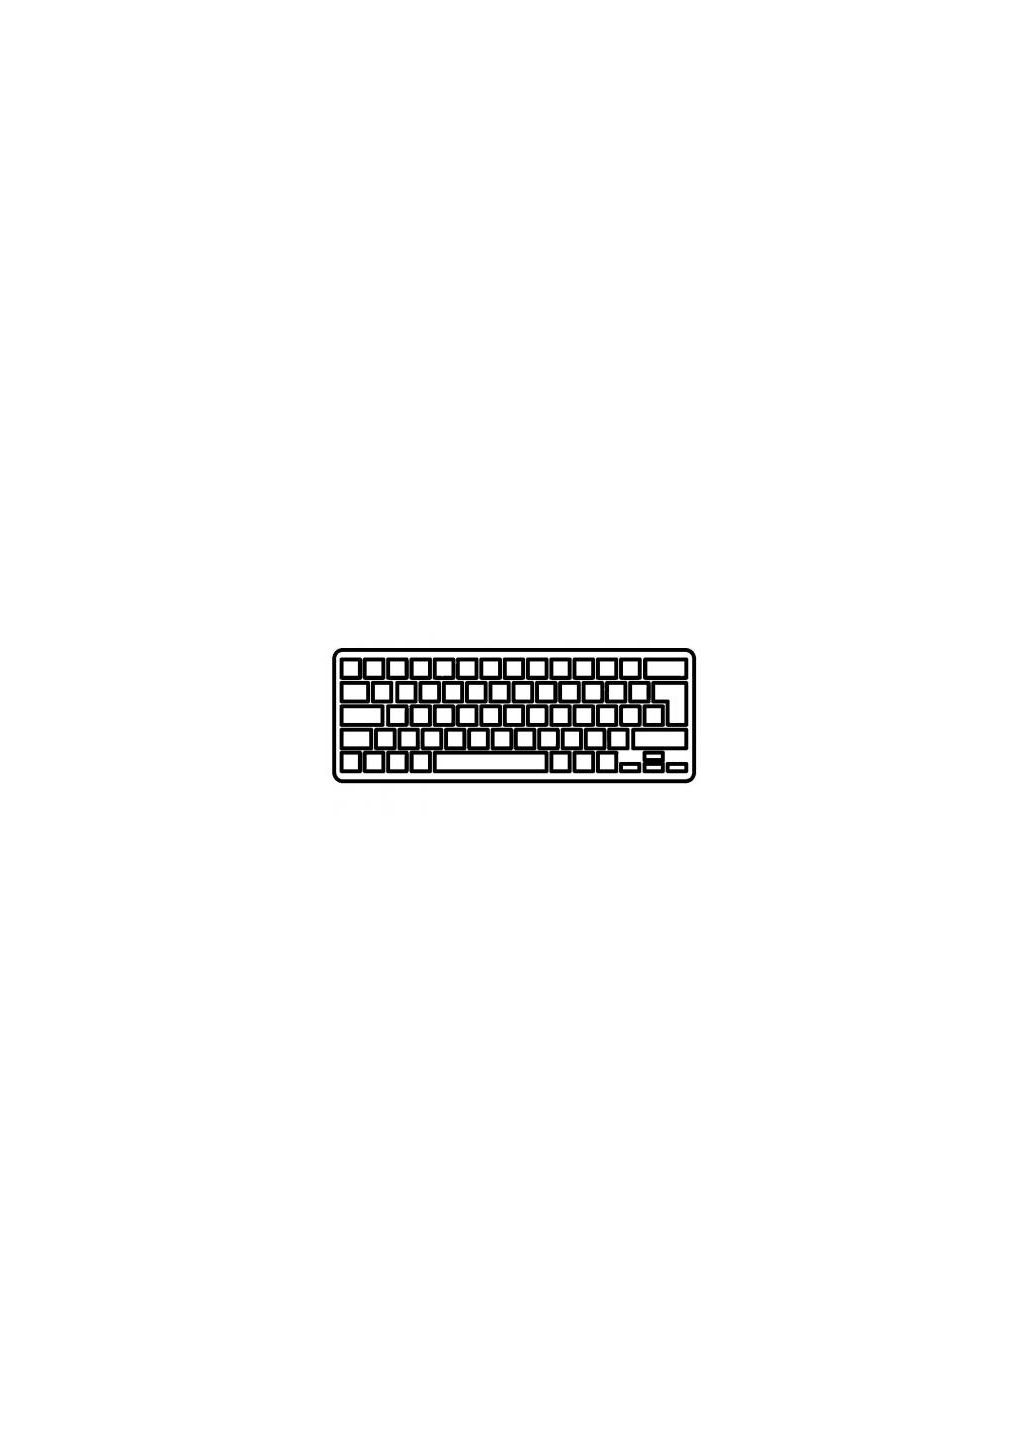 Клавиатура ноутбука Pavilion SleekBook 15B Series черная без рамки RU (A43728) HP pavilion sleekbook 15-b series черная без рамки ua (276706746)